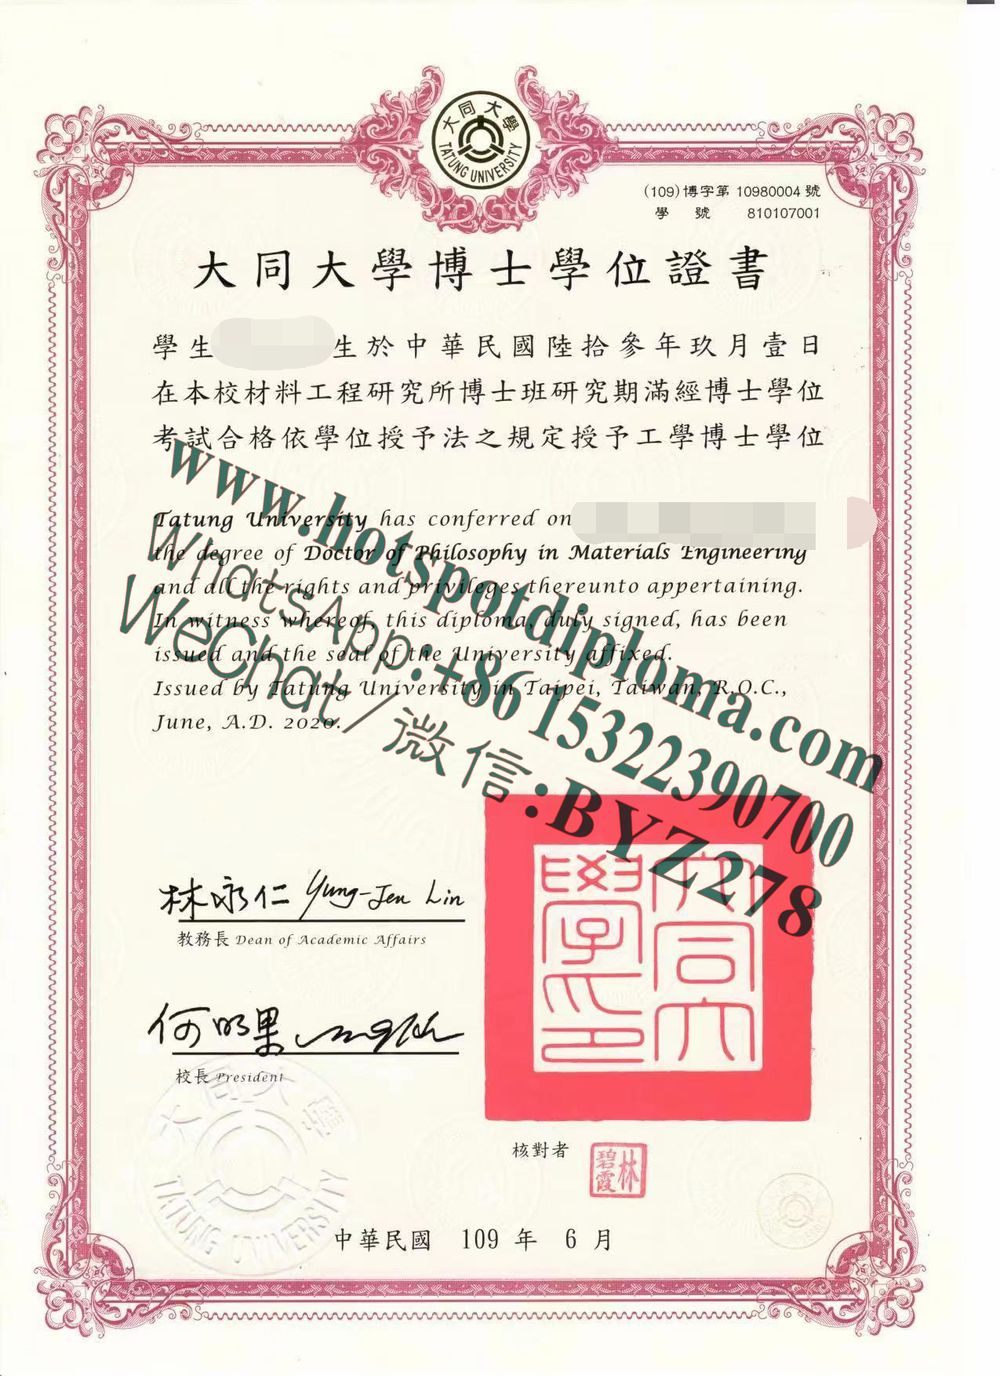 Buy Tatung University Diploma online